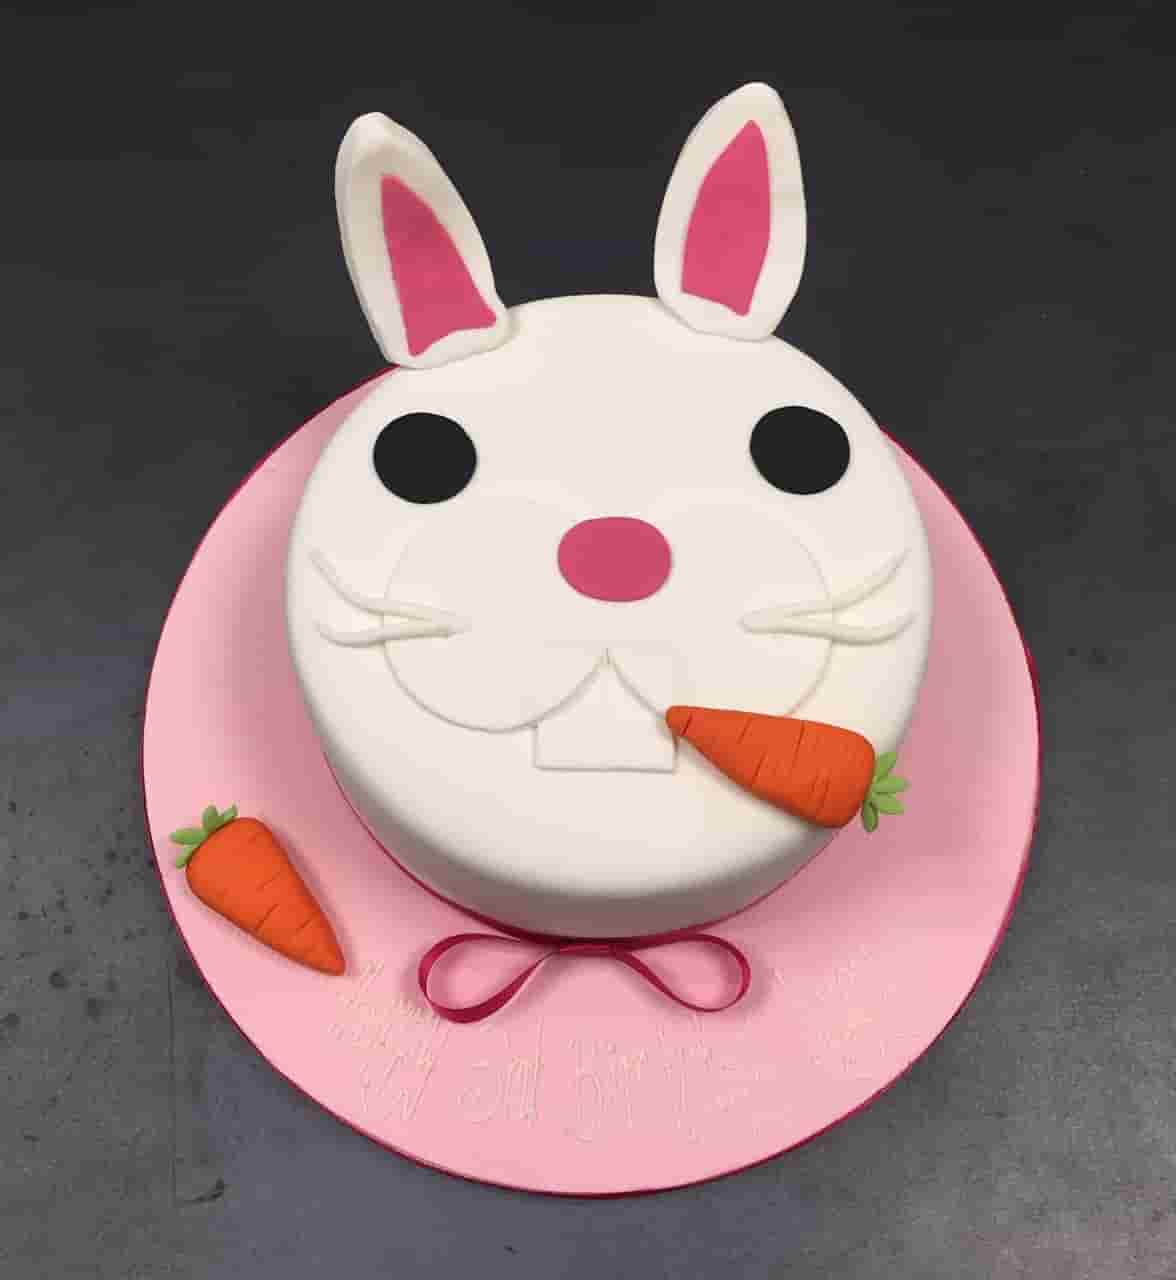 NEW Ceramic Bunny Rabbit Cake / Cupcake Stand – 7.75” x 8.25” Wide, White  Easter | eBay